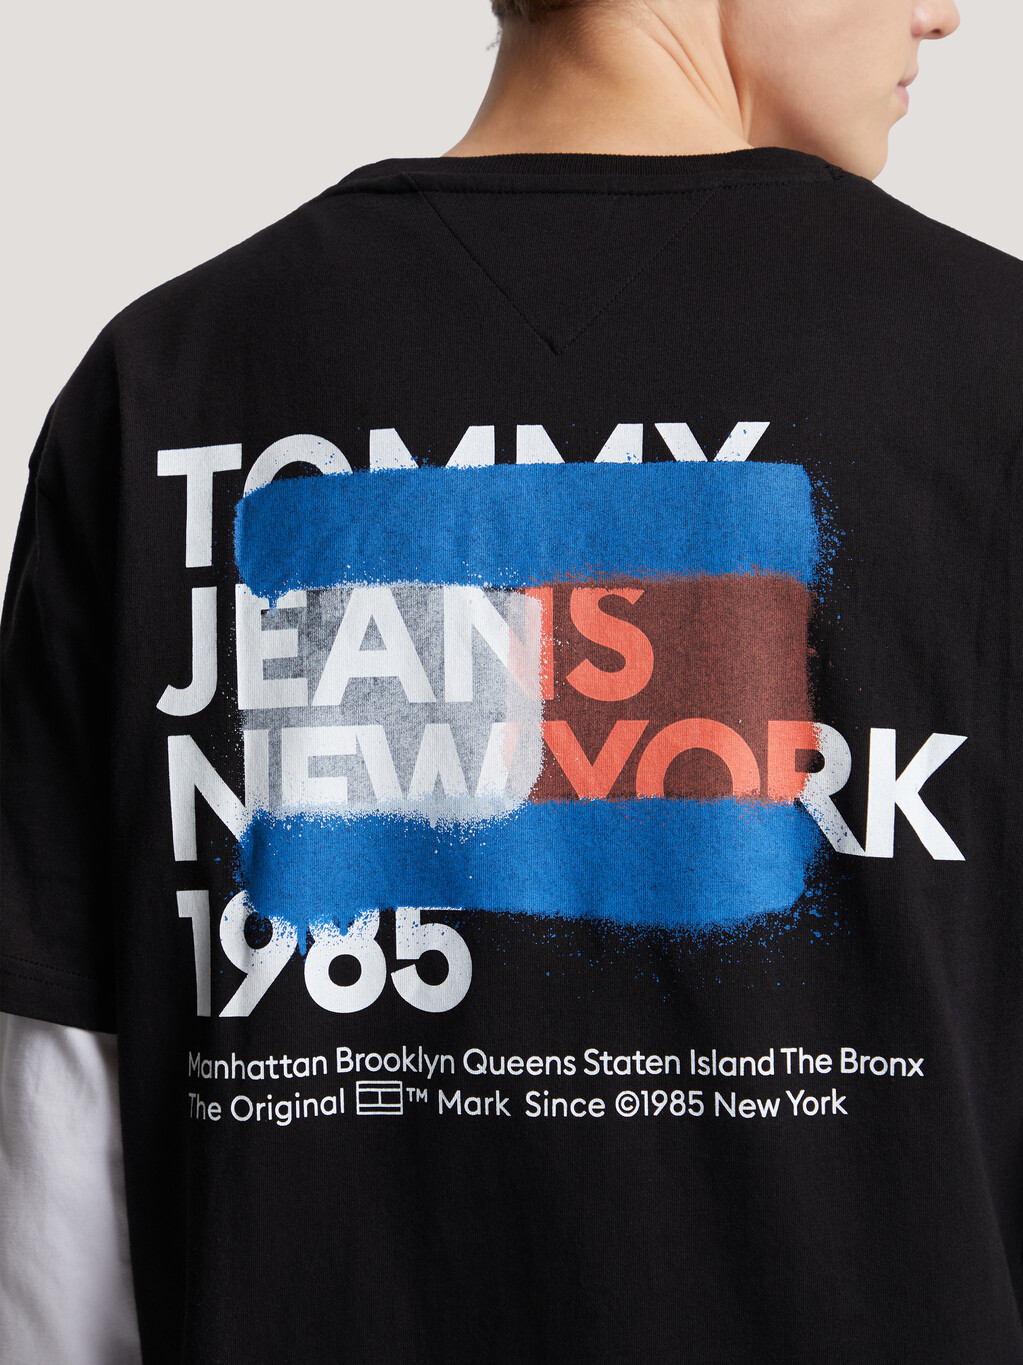 NYC 1985 塗鴉旗幟標誌 T 恤, Black, hi-res